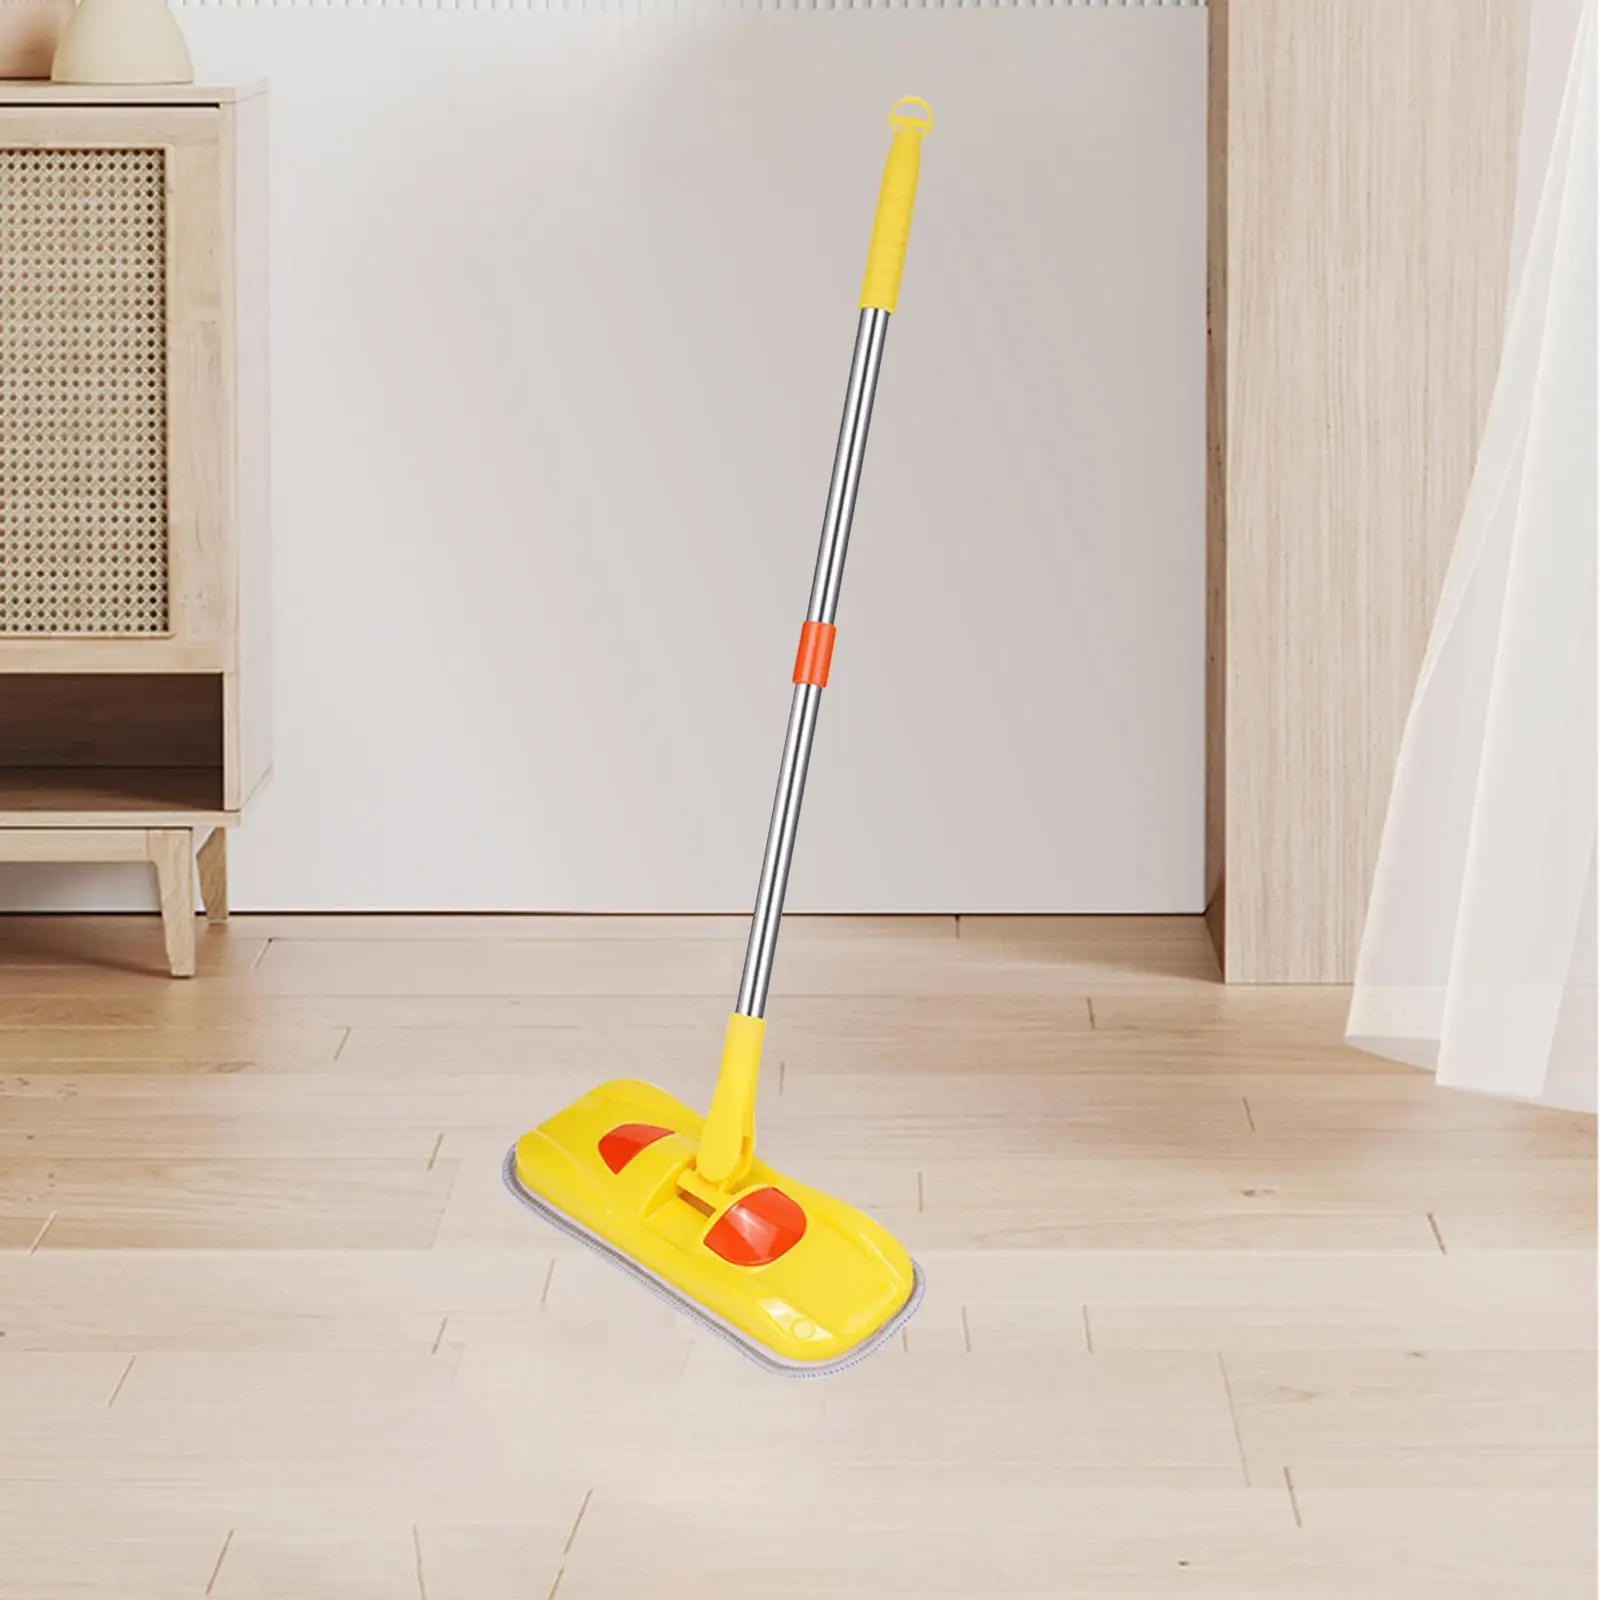 Small Mop Pretend Play Little Housekeeping Helper Tool for Preschool Age 3-6